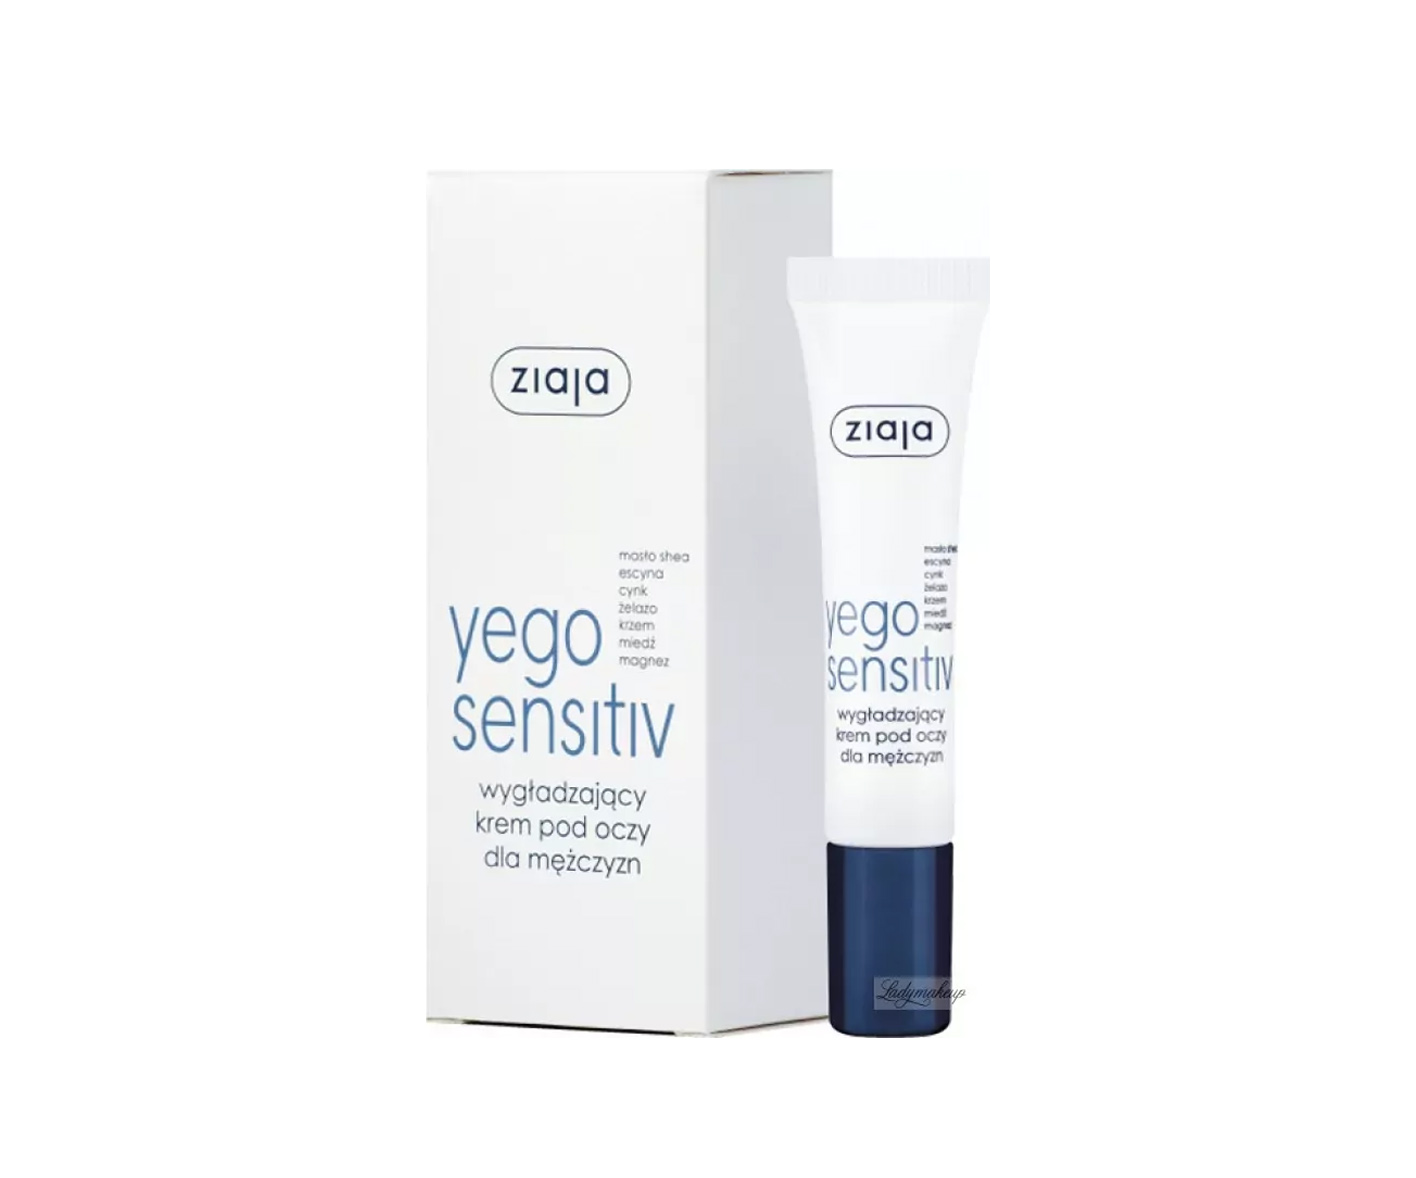 Ziaja, Yego Sensitiv, eye cream for men